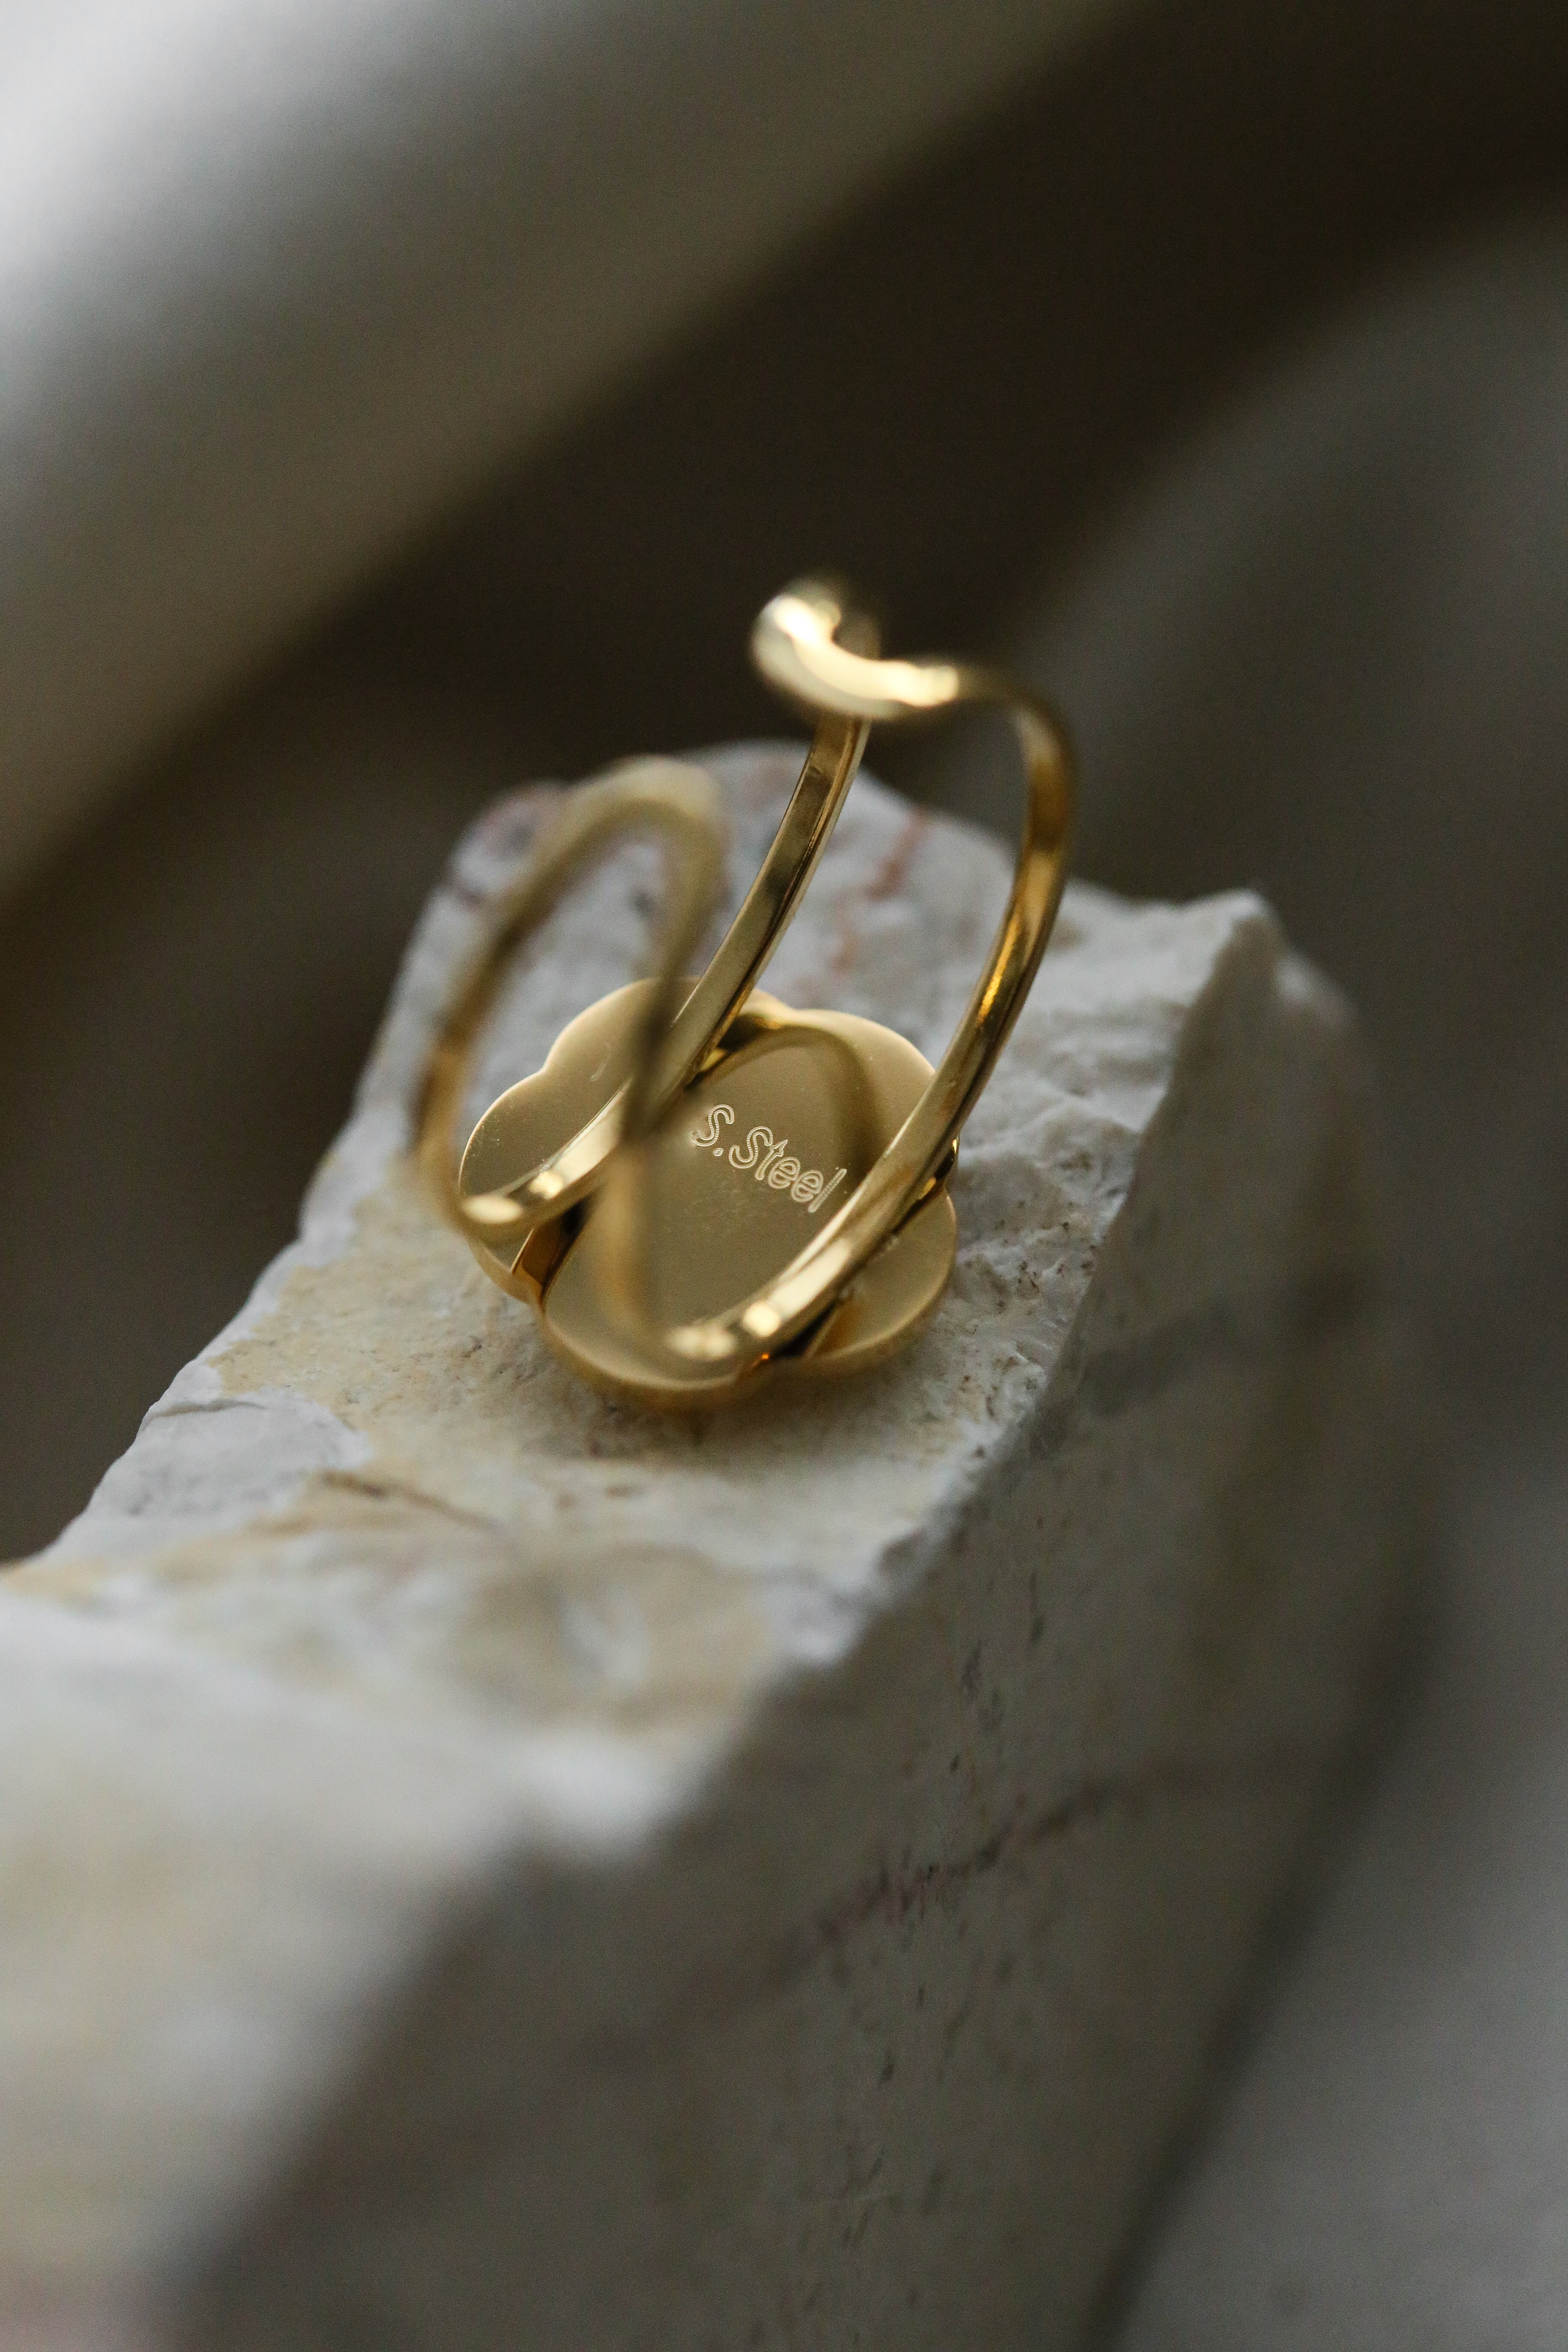 Venus Ring - Boutique Minimaliste has waterproof, durable, elegant and vintage inspired jewelry